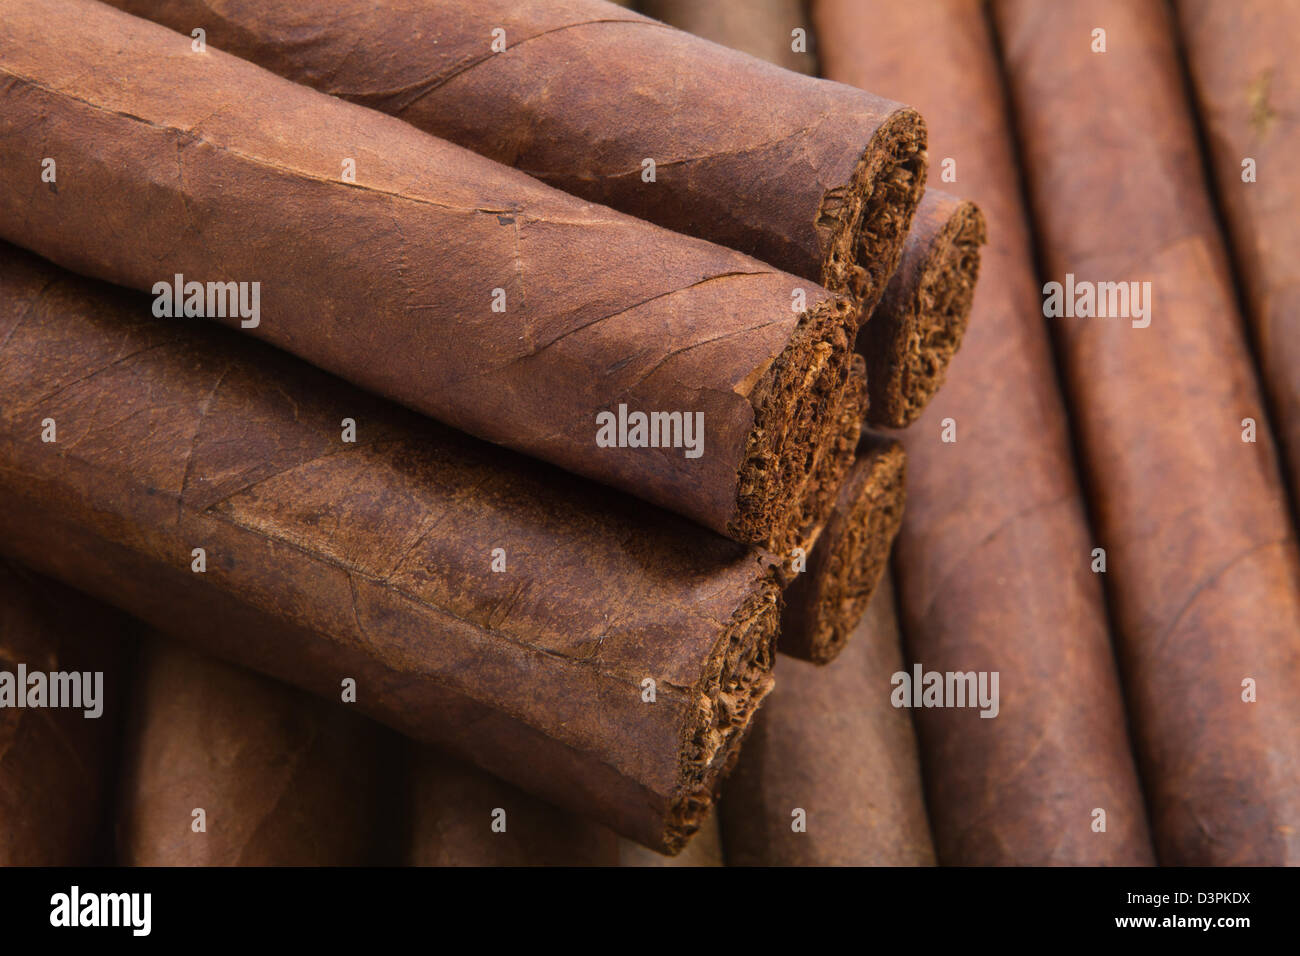 Tabaco tabacco Sigari maduro sfumature di legante di sigari Foto Stock